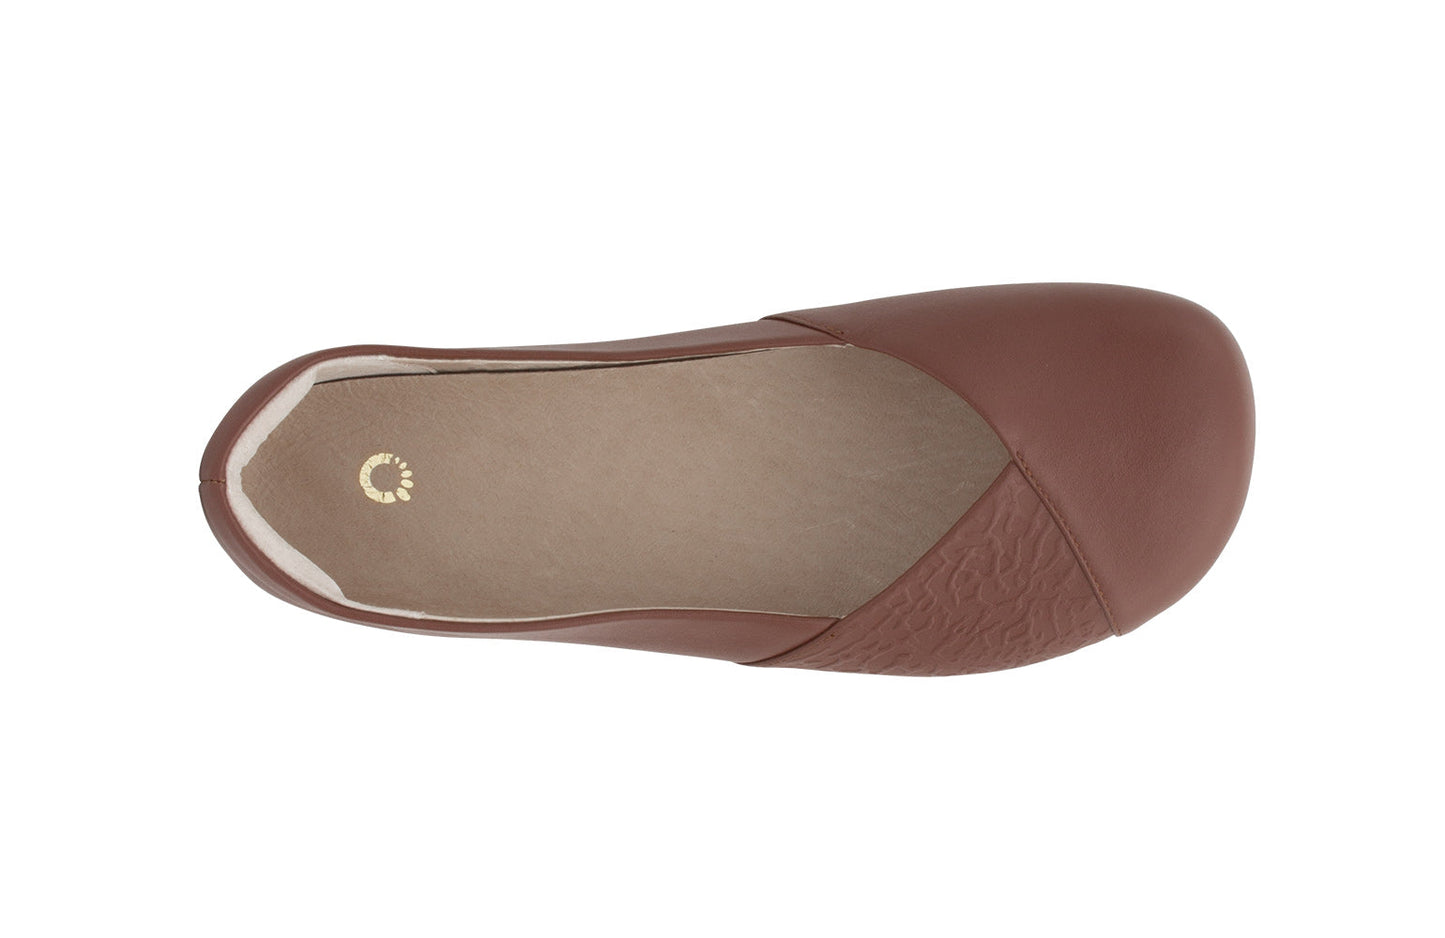 Xero Shoes Phoenix Leather barfods ballerinaer til kvinder i farven brown, top